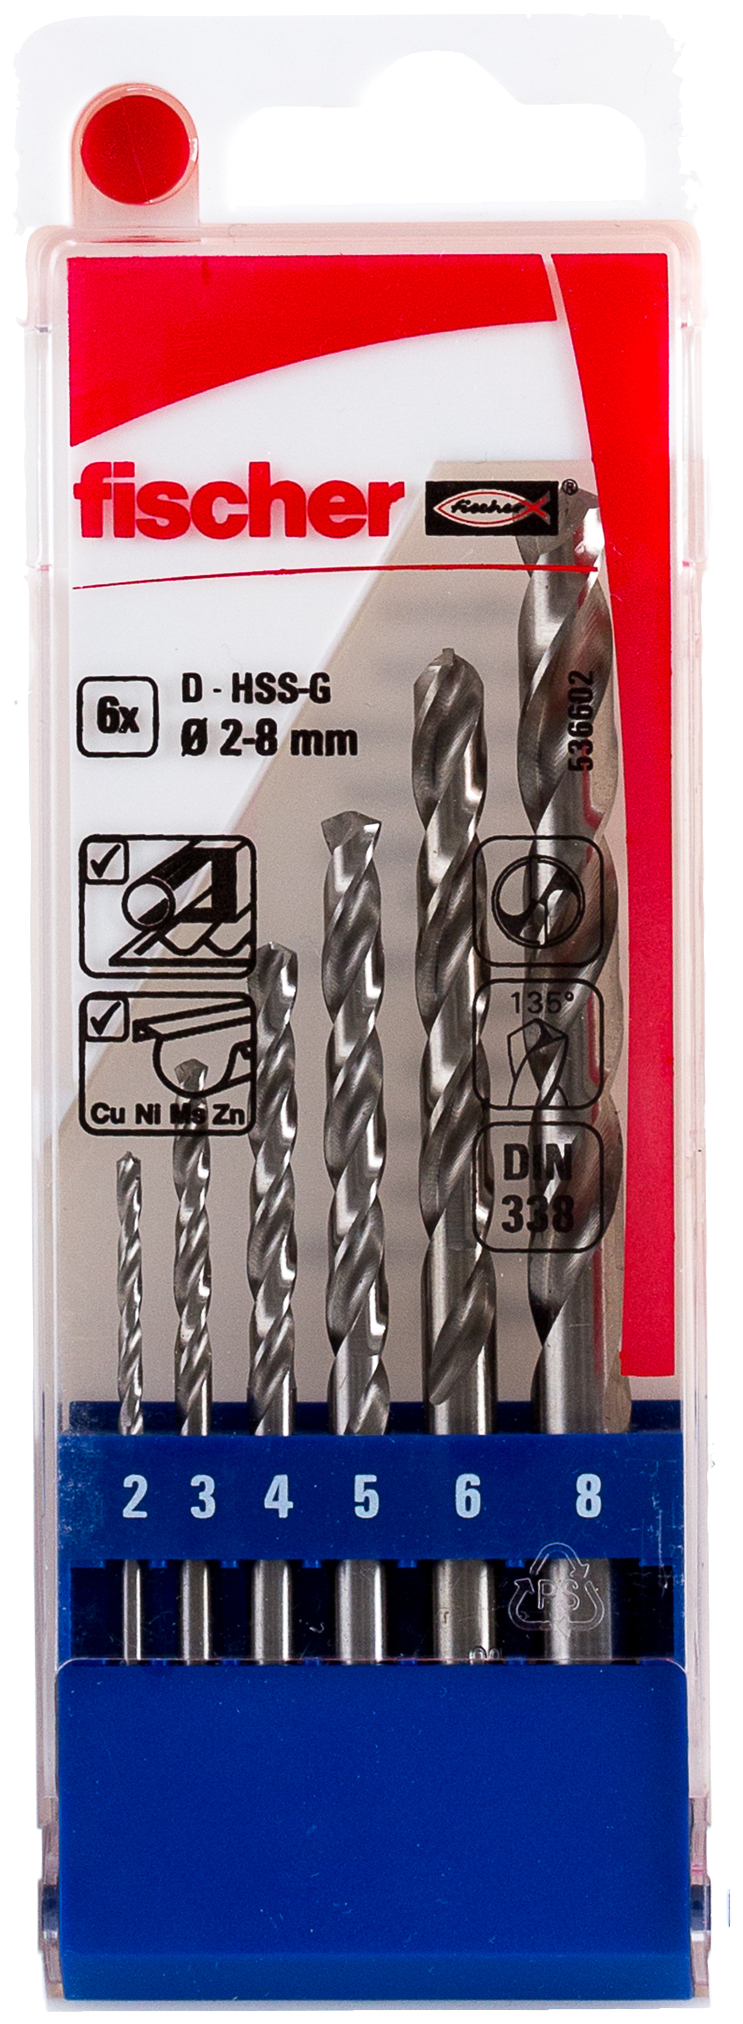 fischer Set 6 punte trapano metallo HSS-G 2-8mm (D-HSS) (6 Pz.) Set di punte professionaliper metallo in acciaio HSS-G.